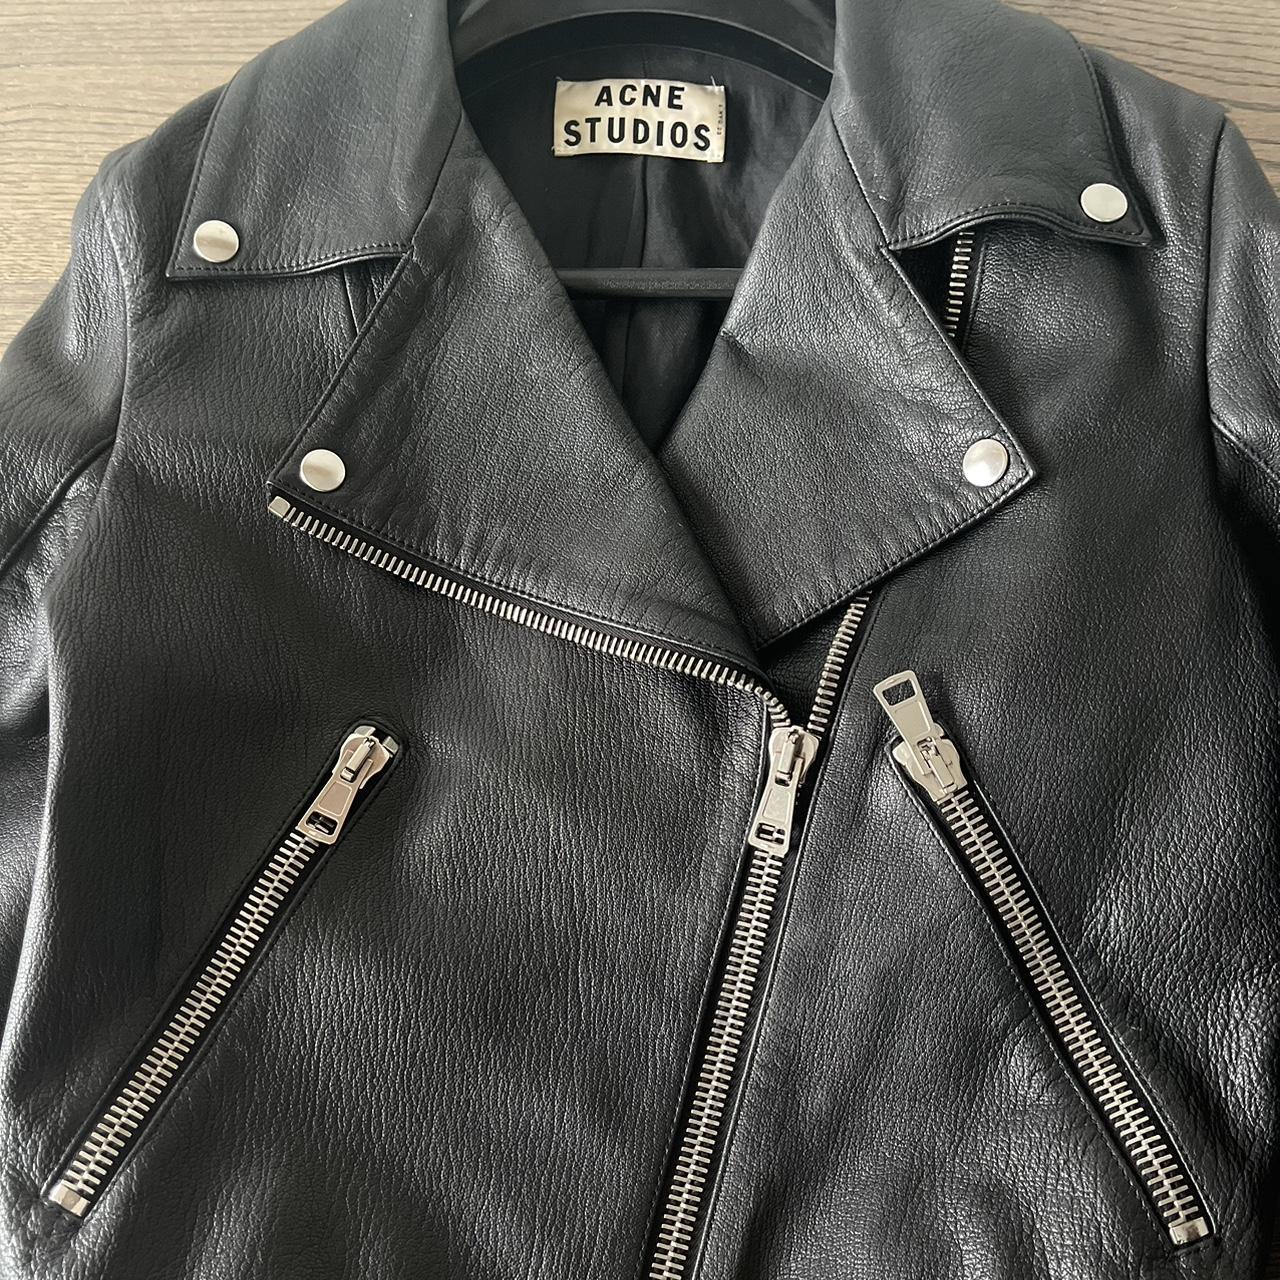 Acne studios Rita SS13 black leather biker jacket... - Depop